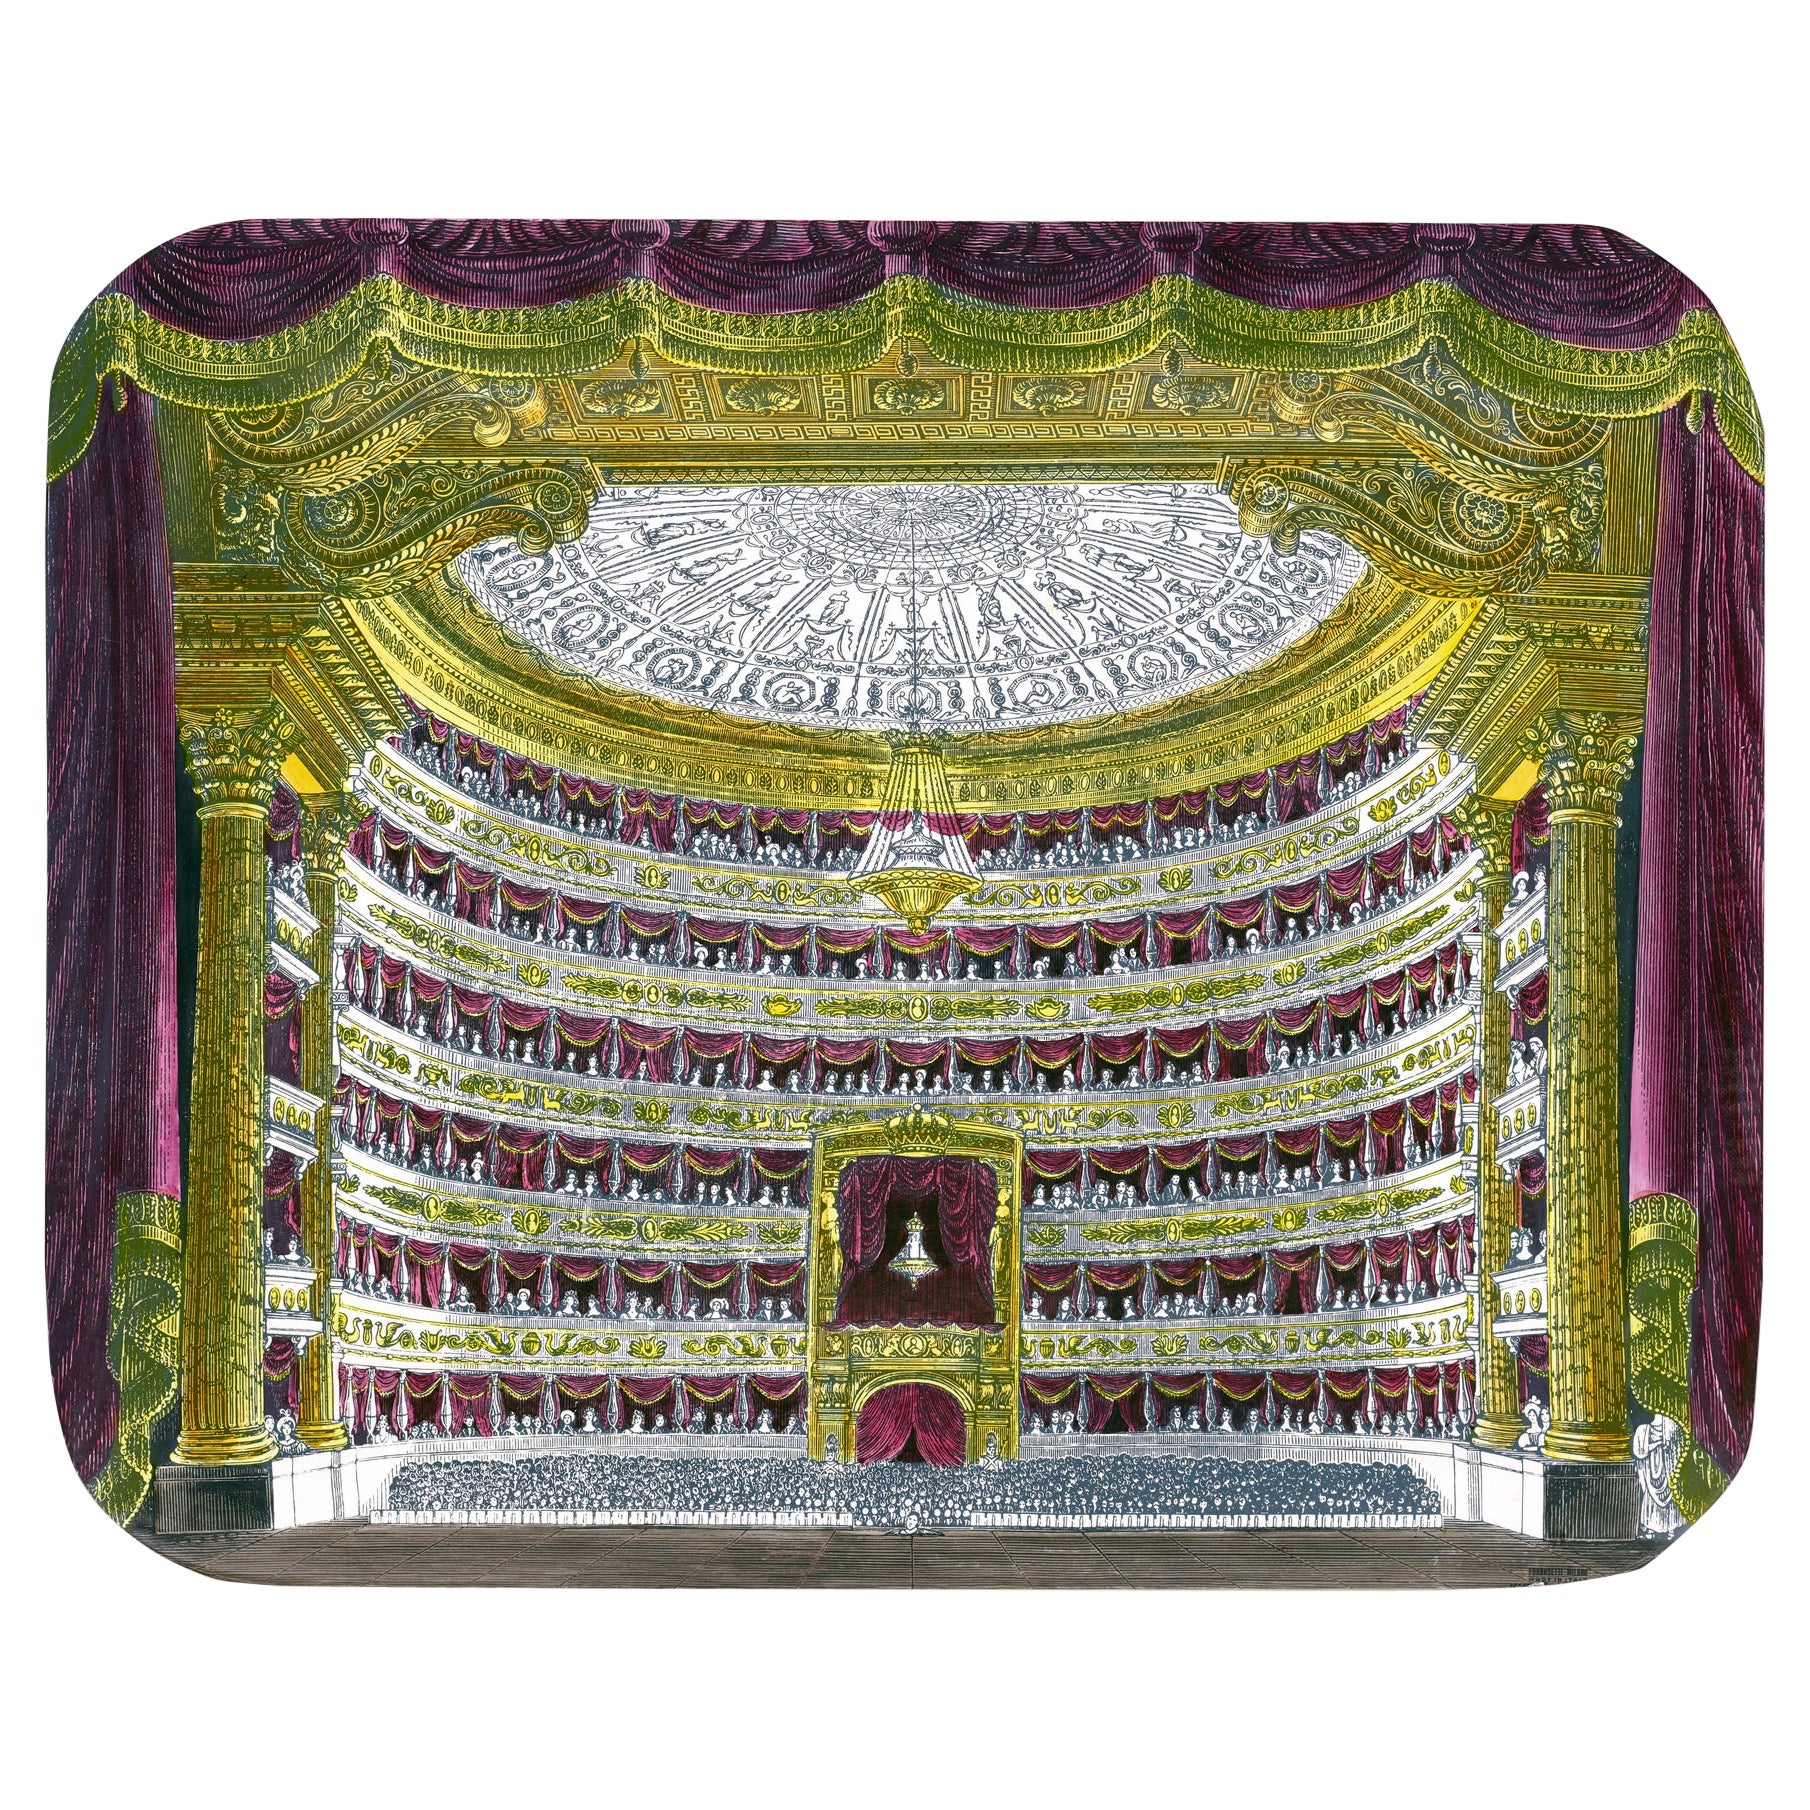 Piero Fornasetti Large Tray La Scala Opera House Painted by Hand